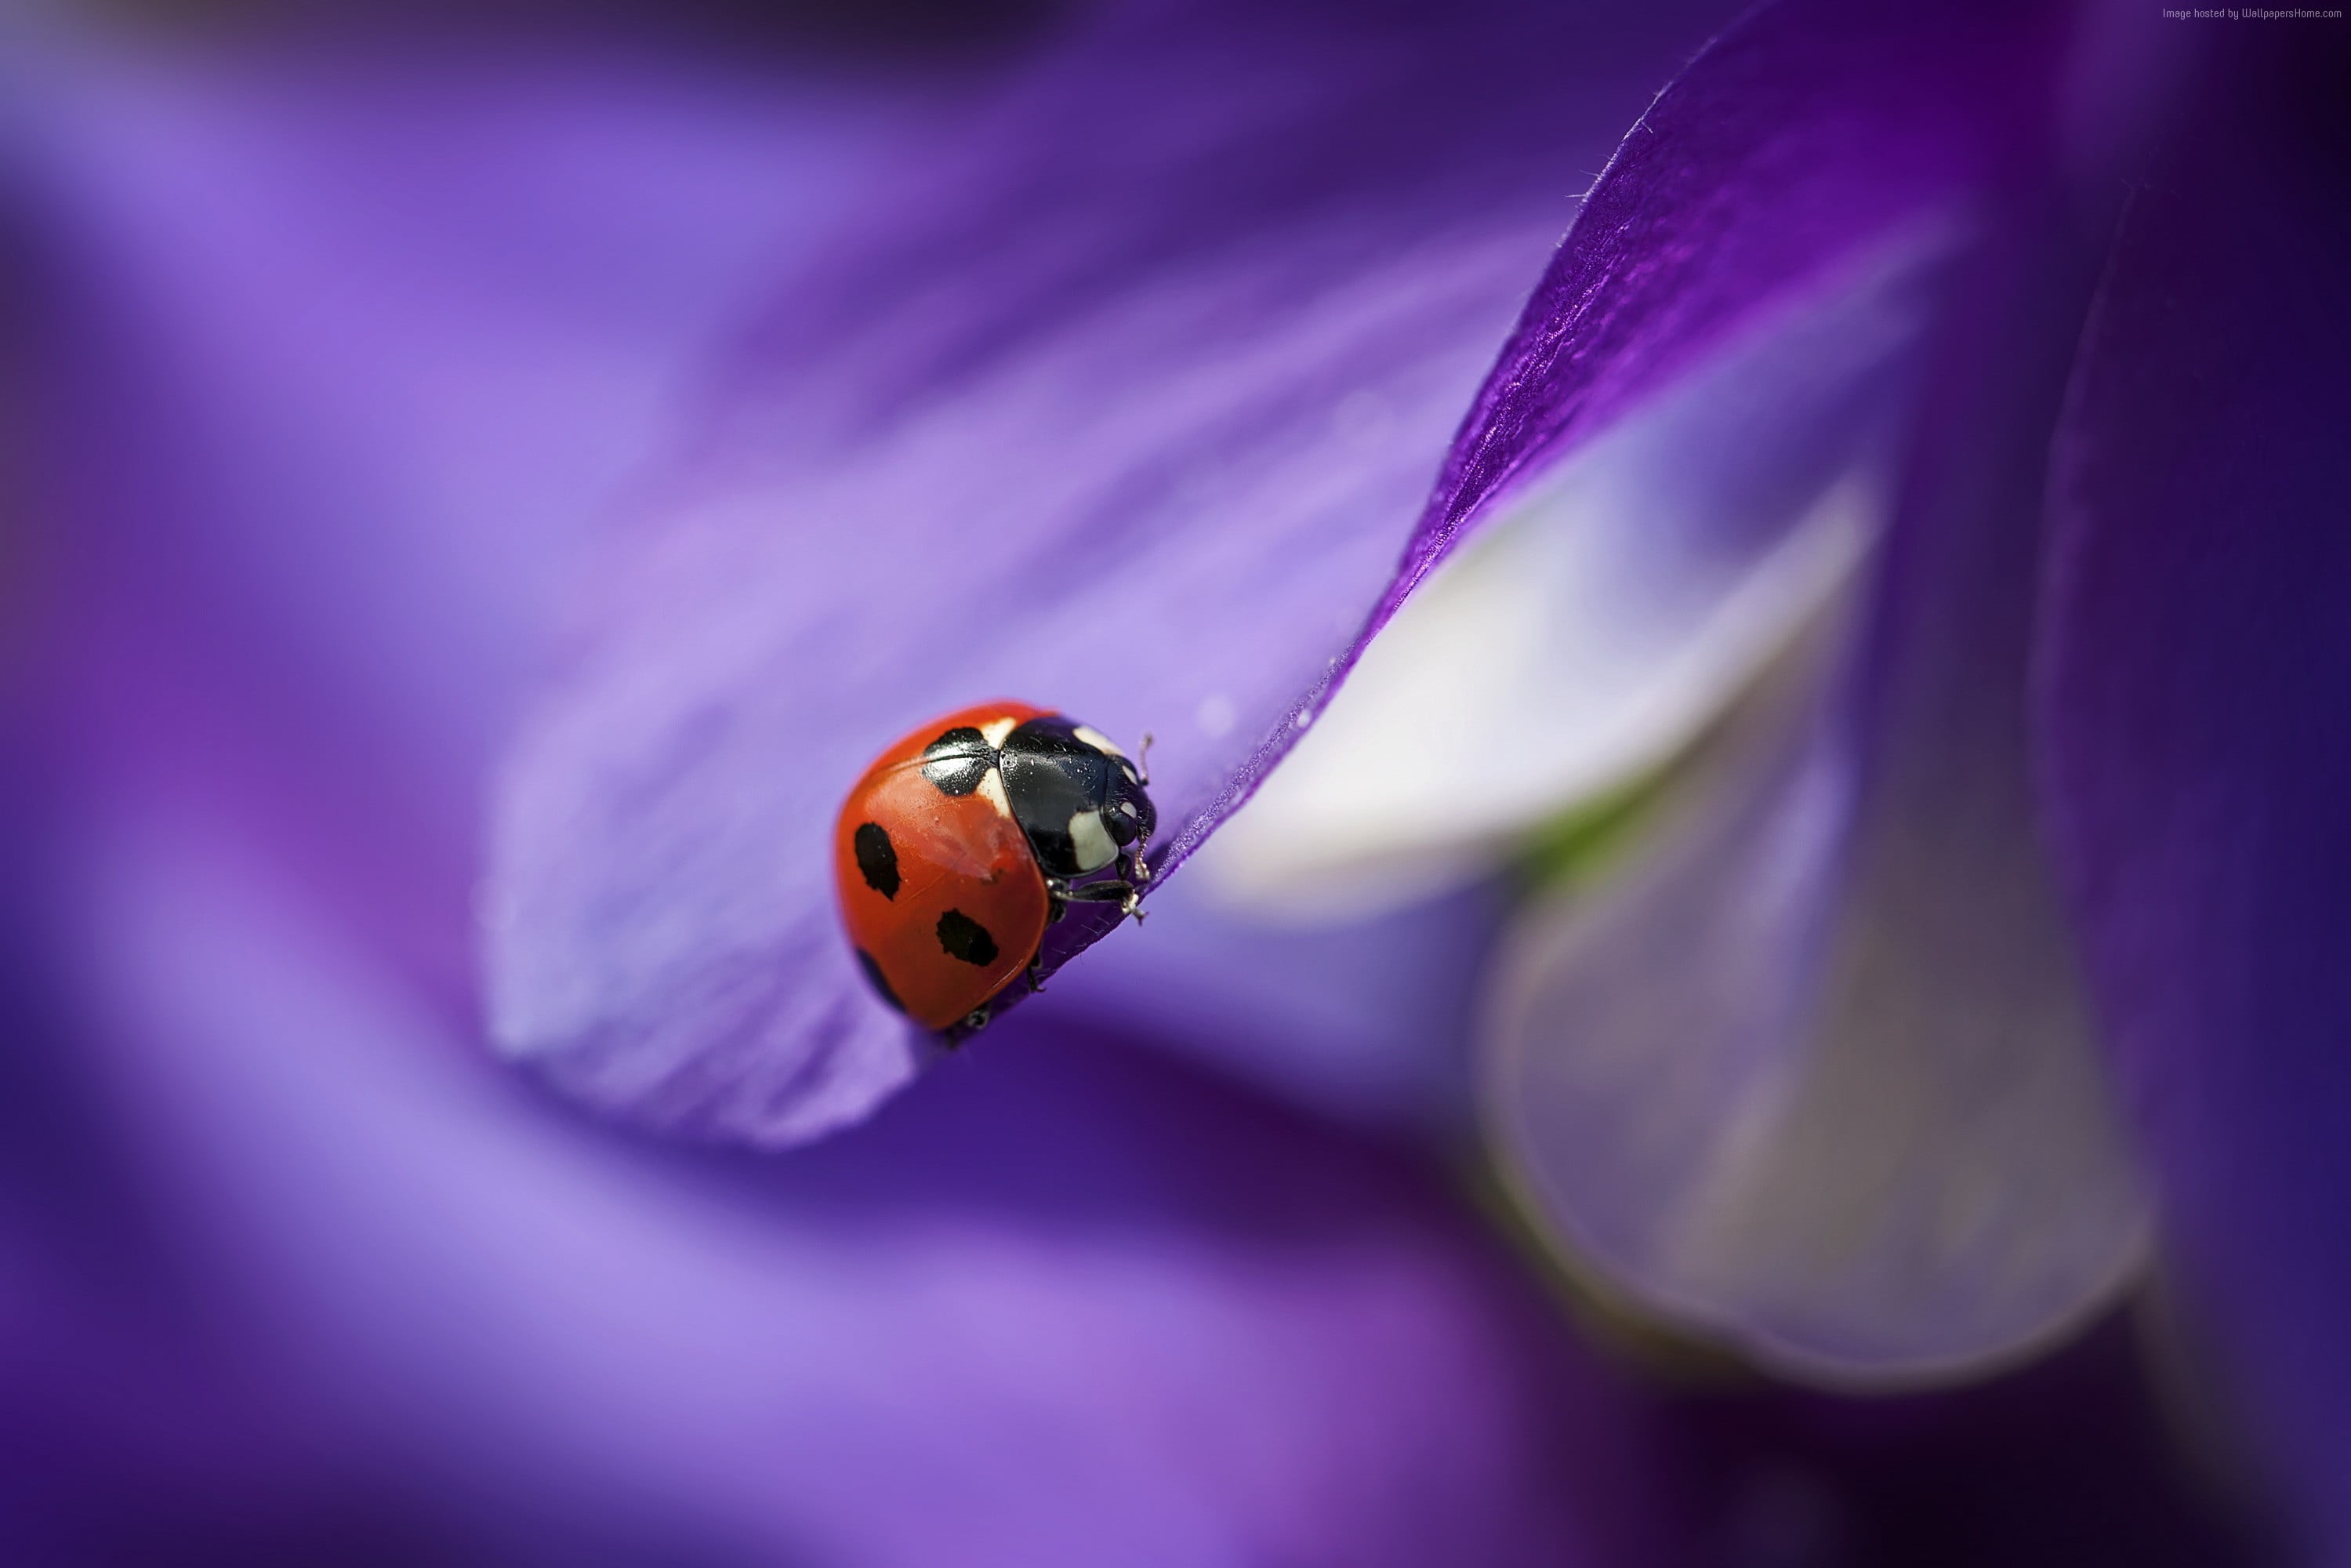 close-up photography of red ladybug on purple petaled flower